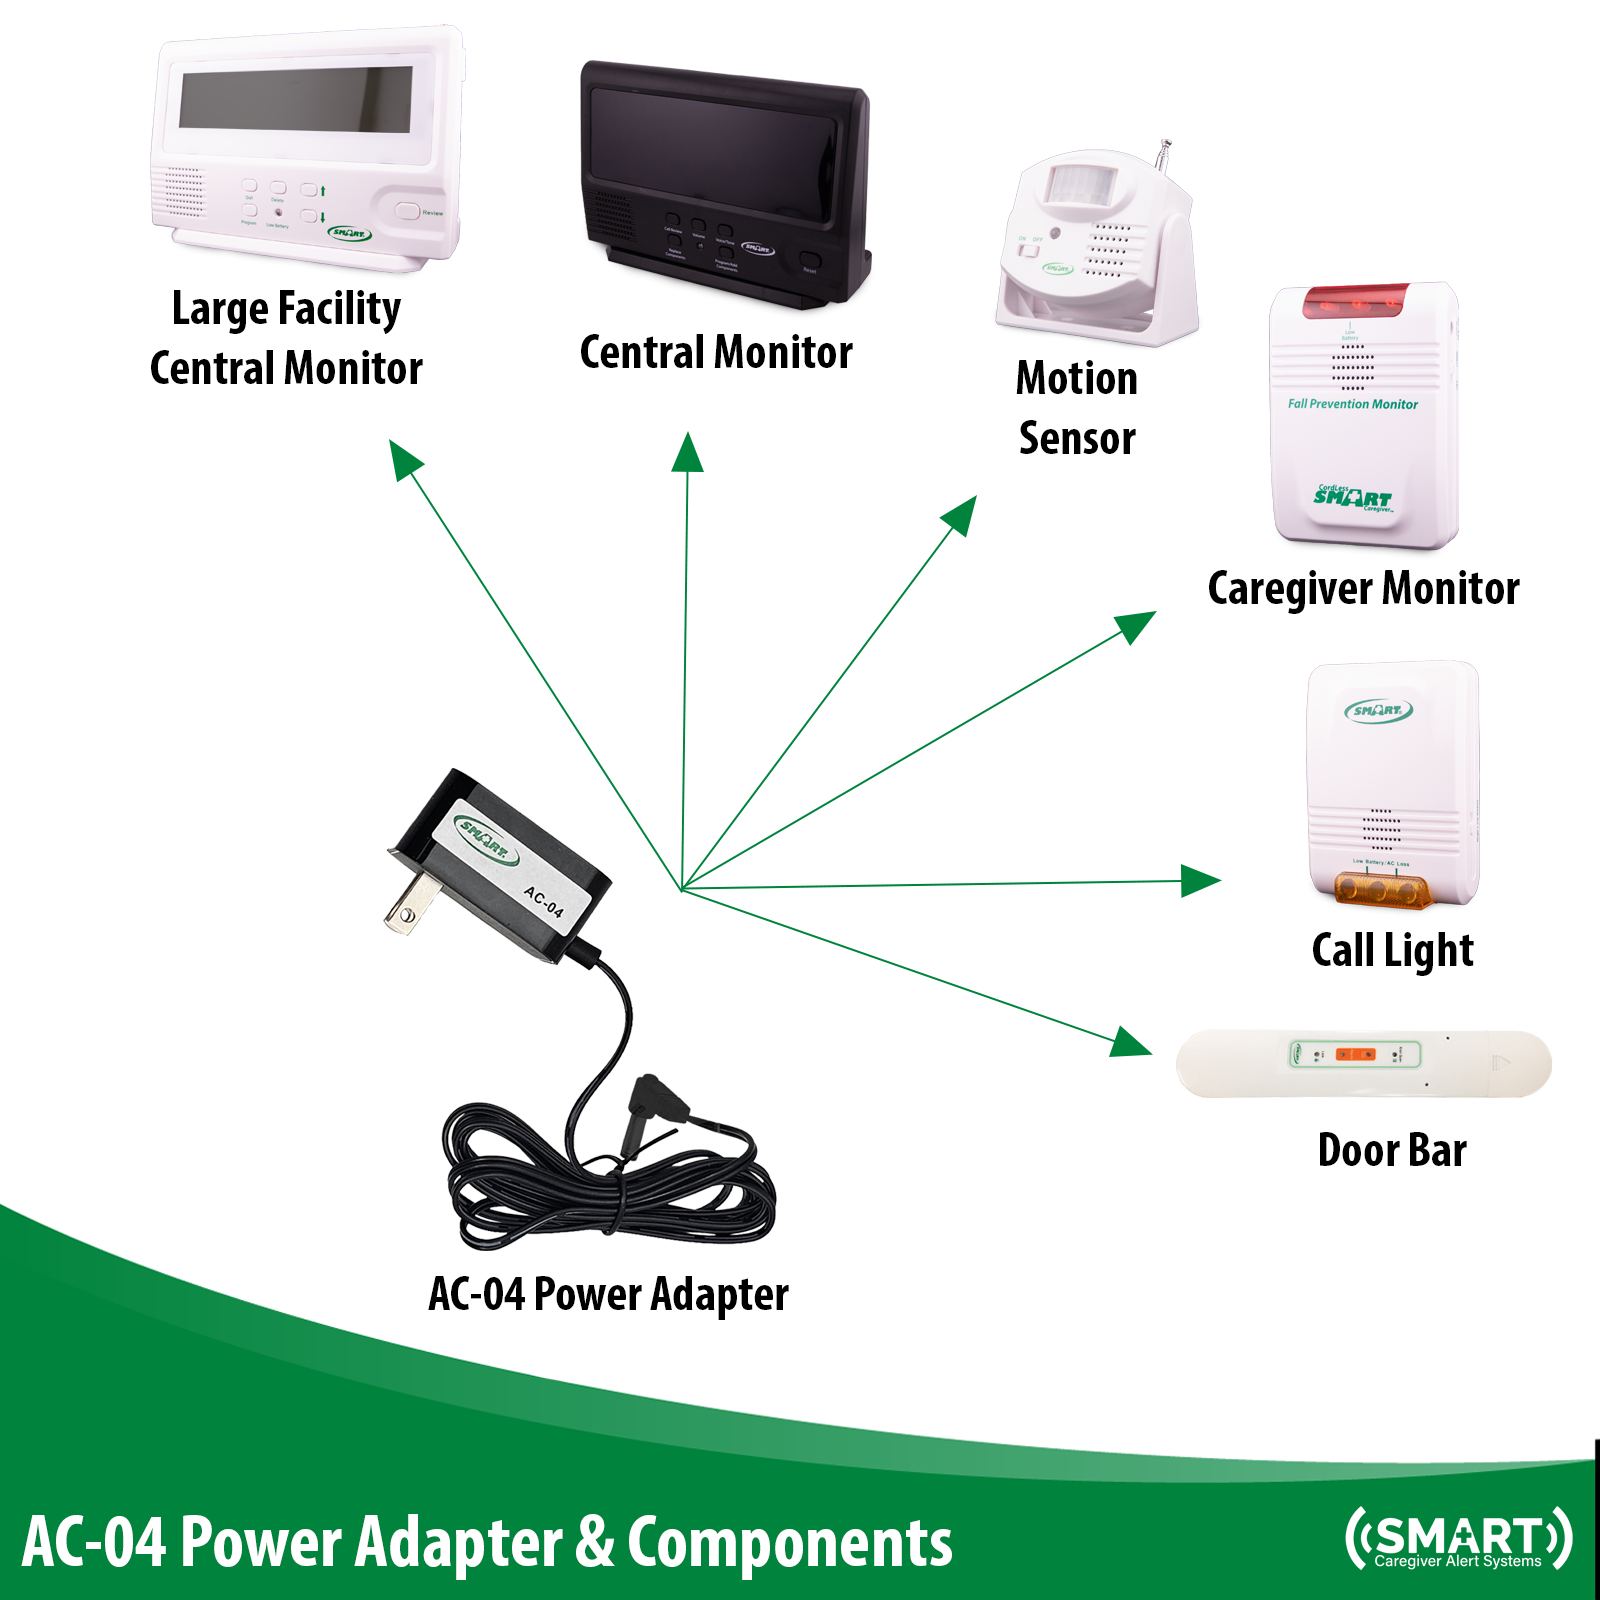 Power Adapter AC-04